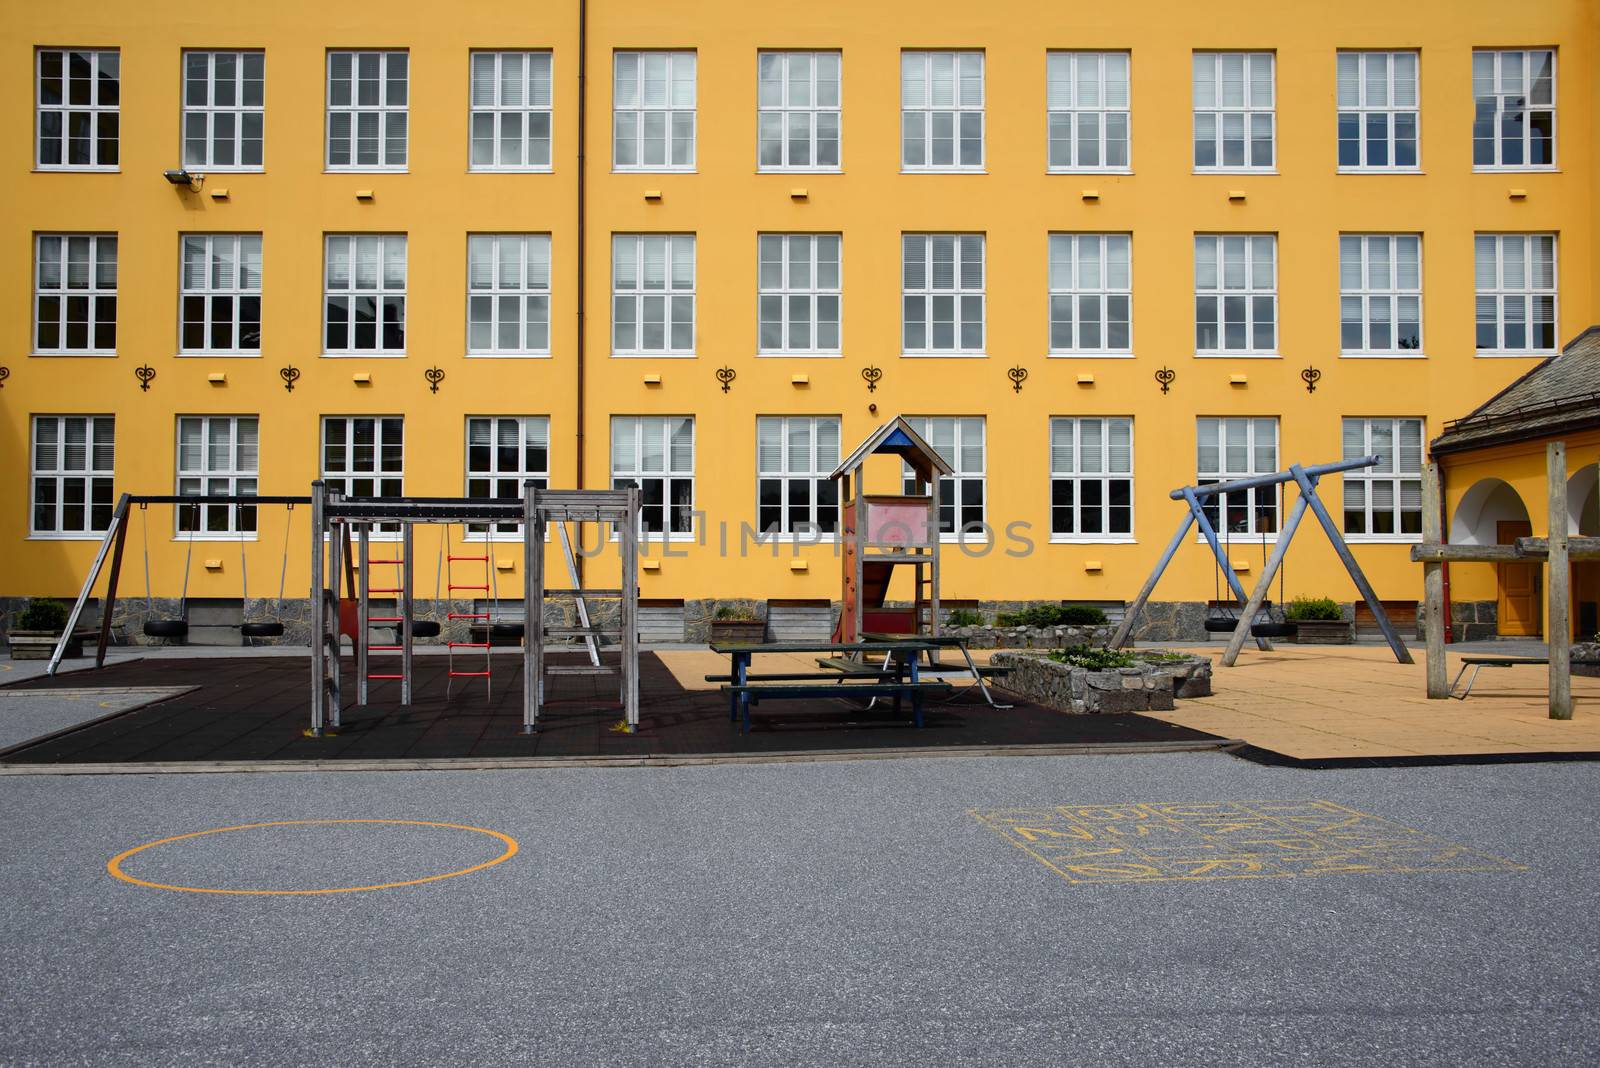 Empty schoolyard by GryT